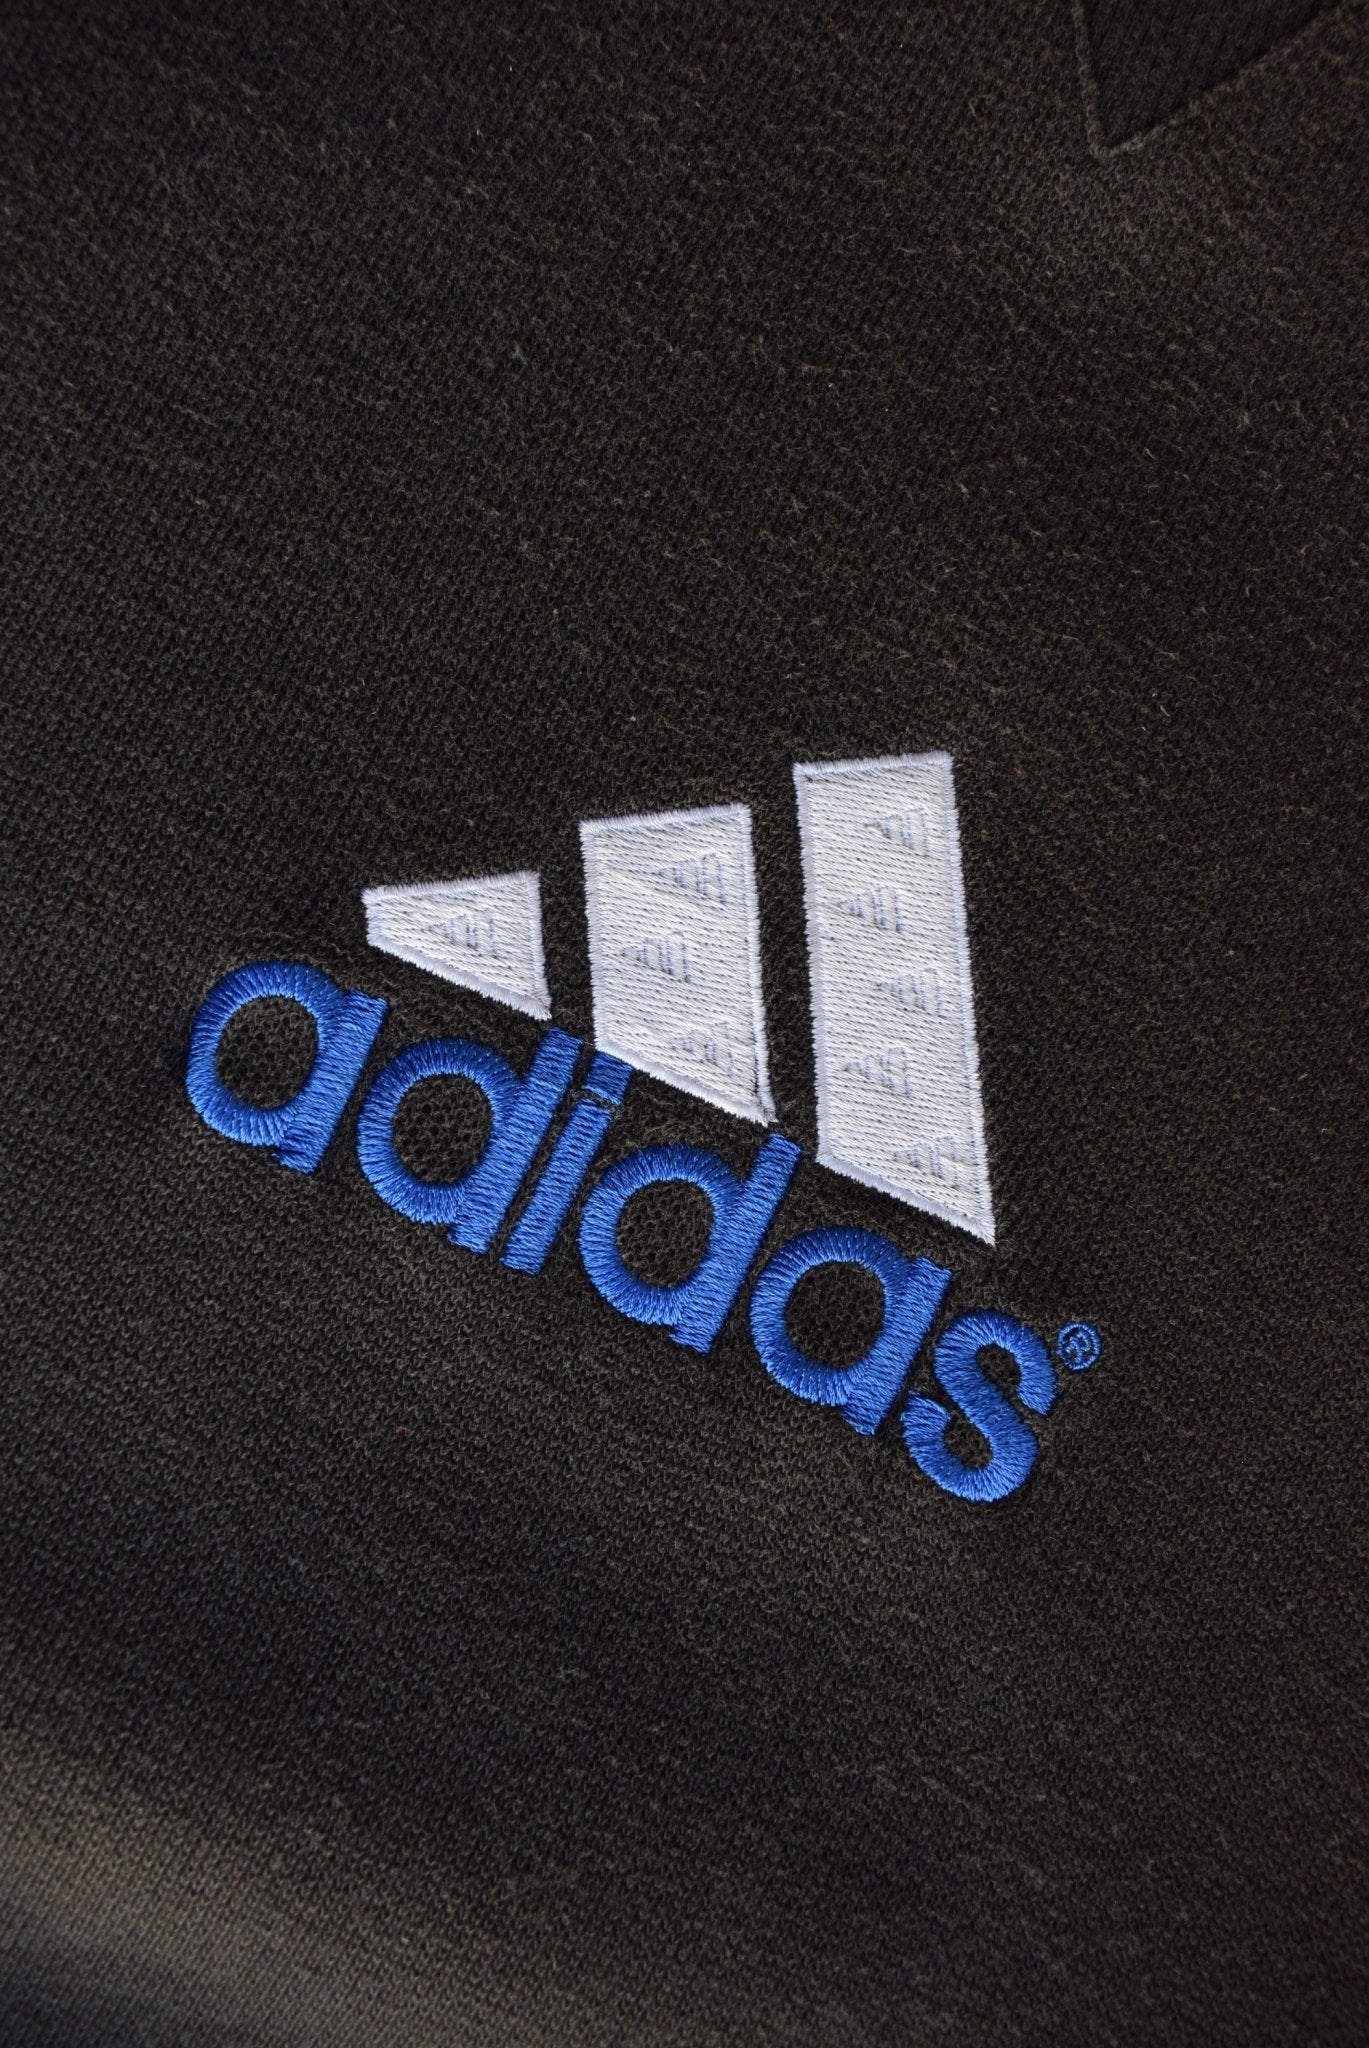 Vintage 90s Adidas Corporate Line Embroidered Spellout Crewneck (L) - Retrospective Store